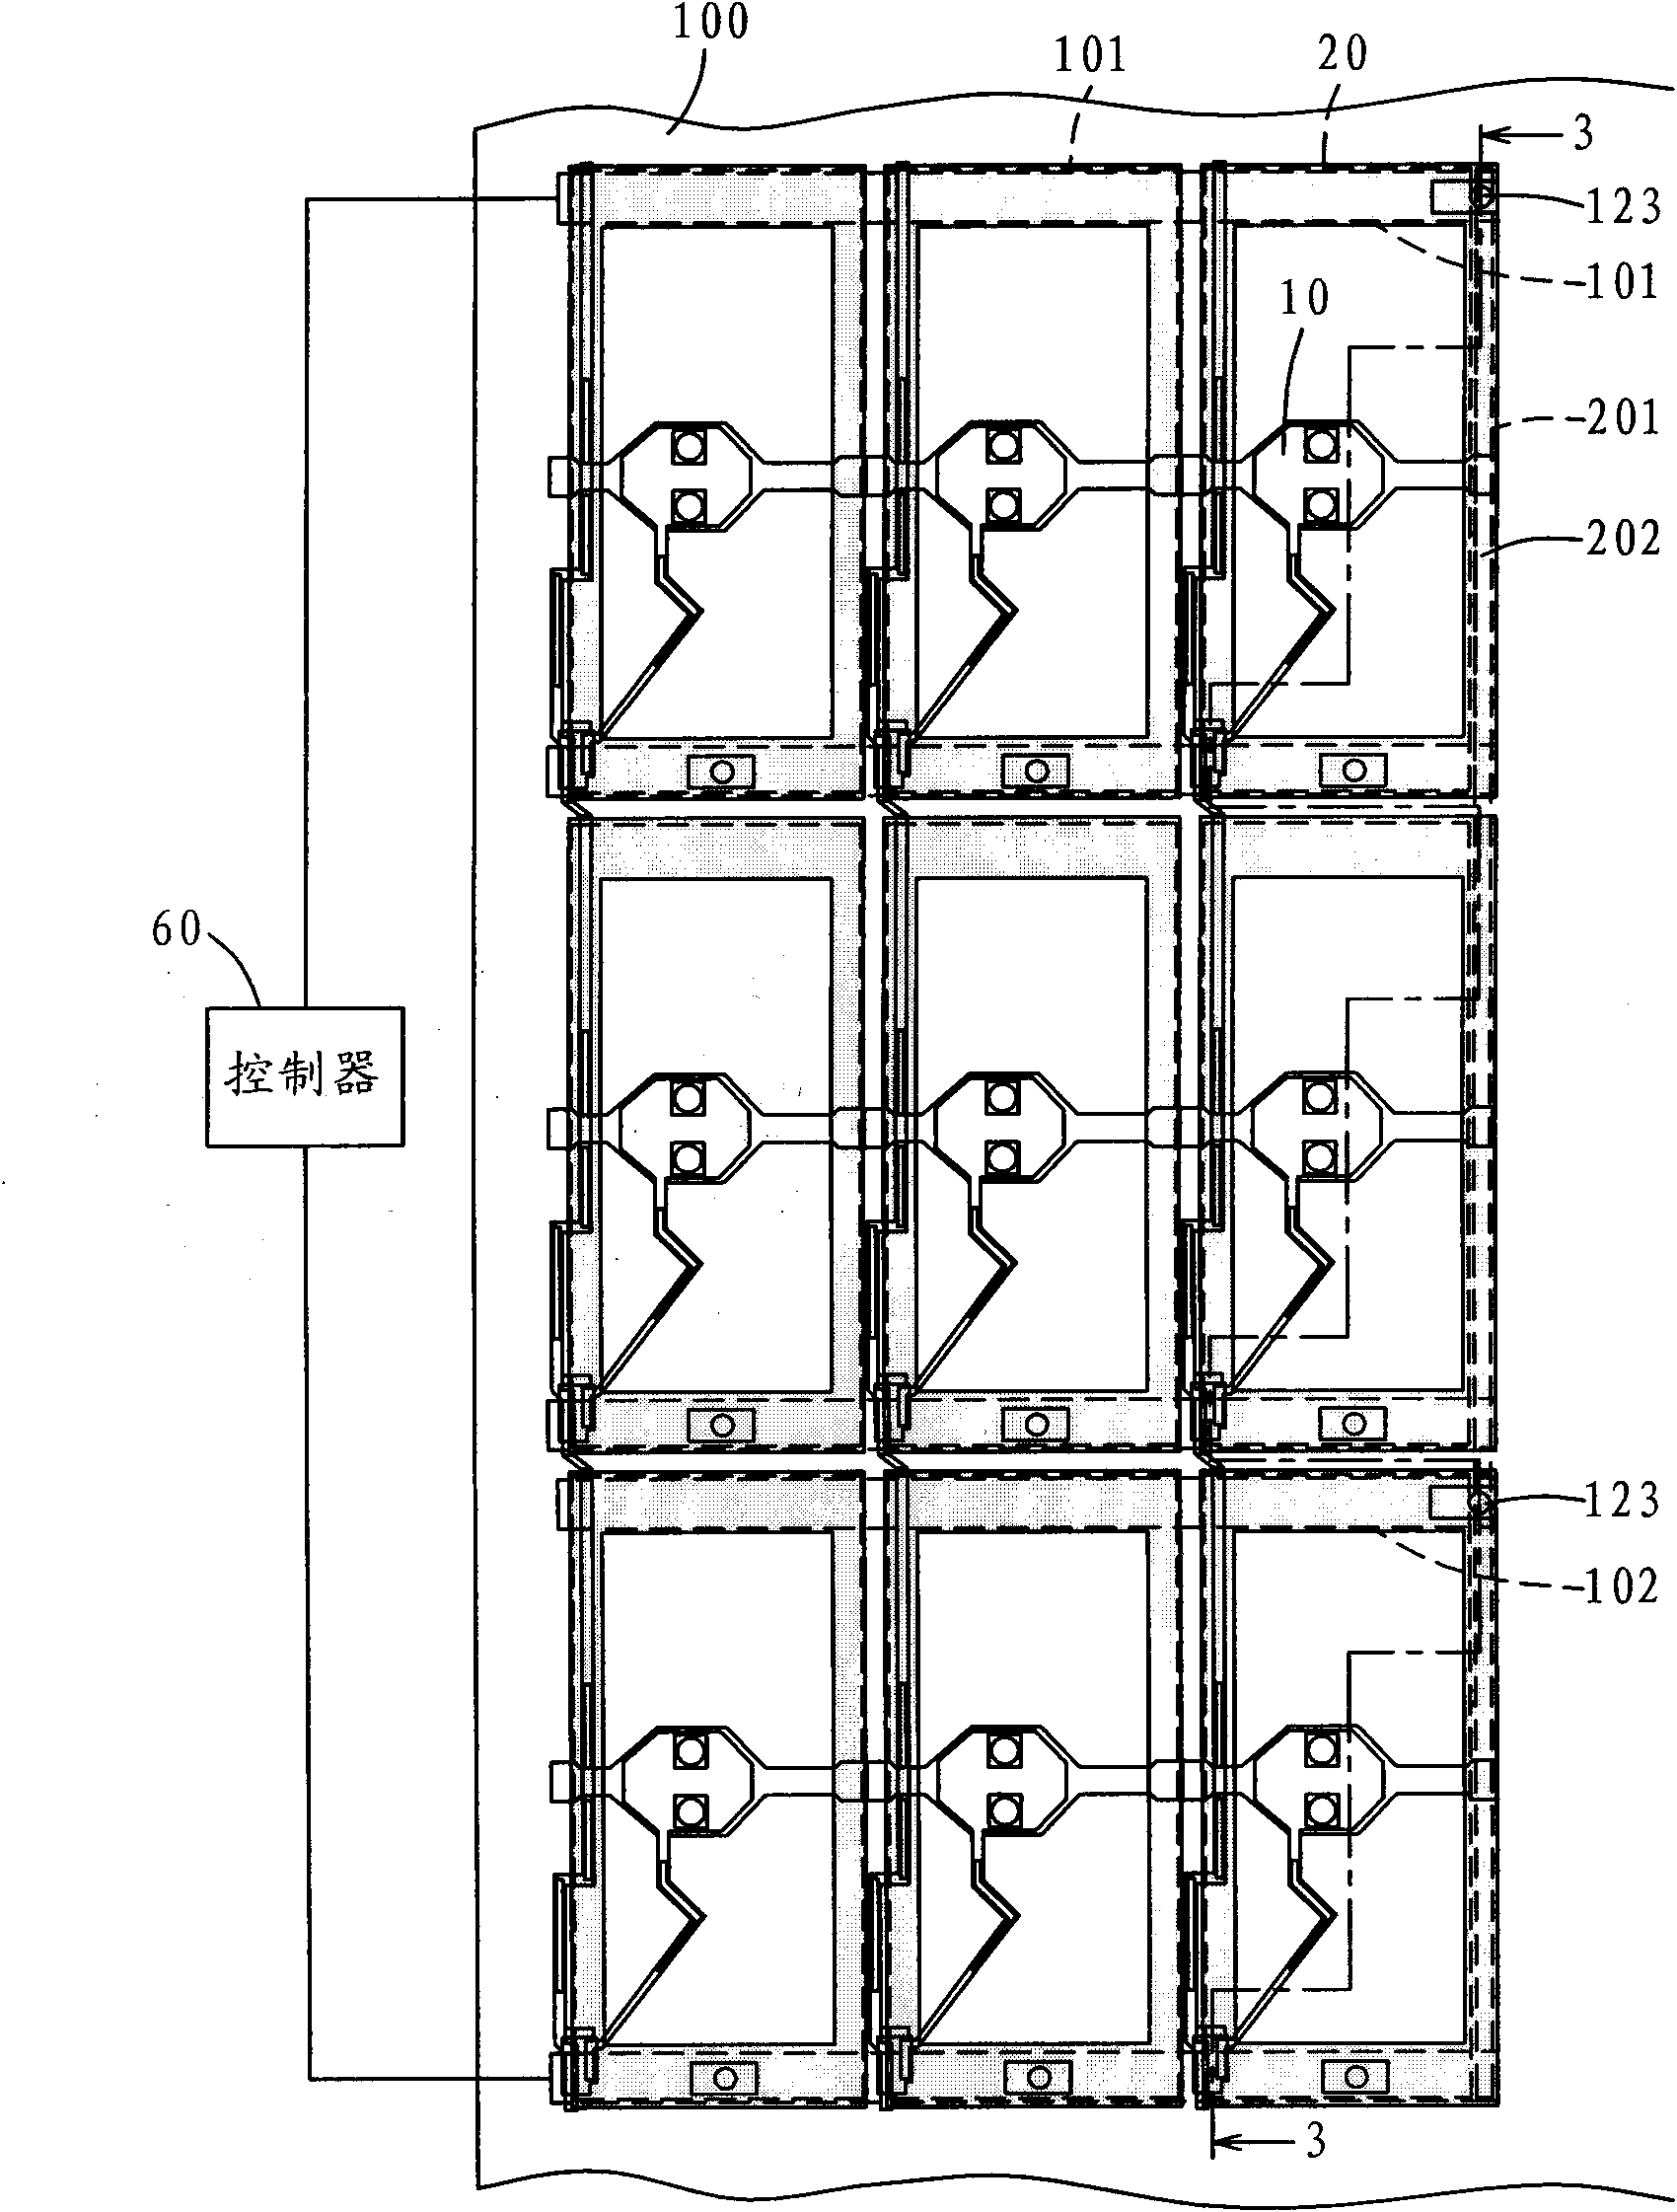 Liquid crystal display panel and method for integrating keys on liquid crystal display panel